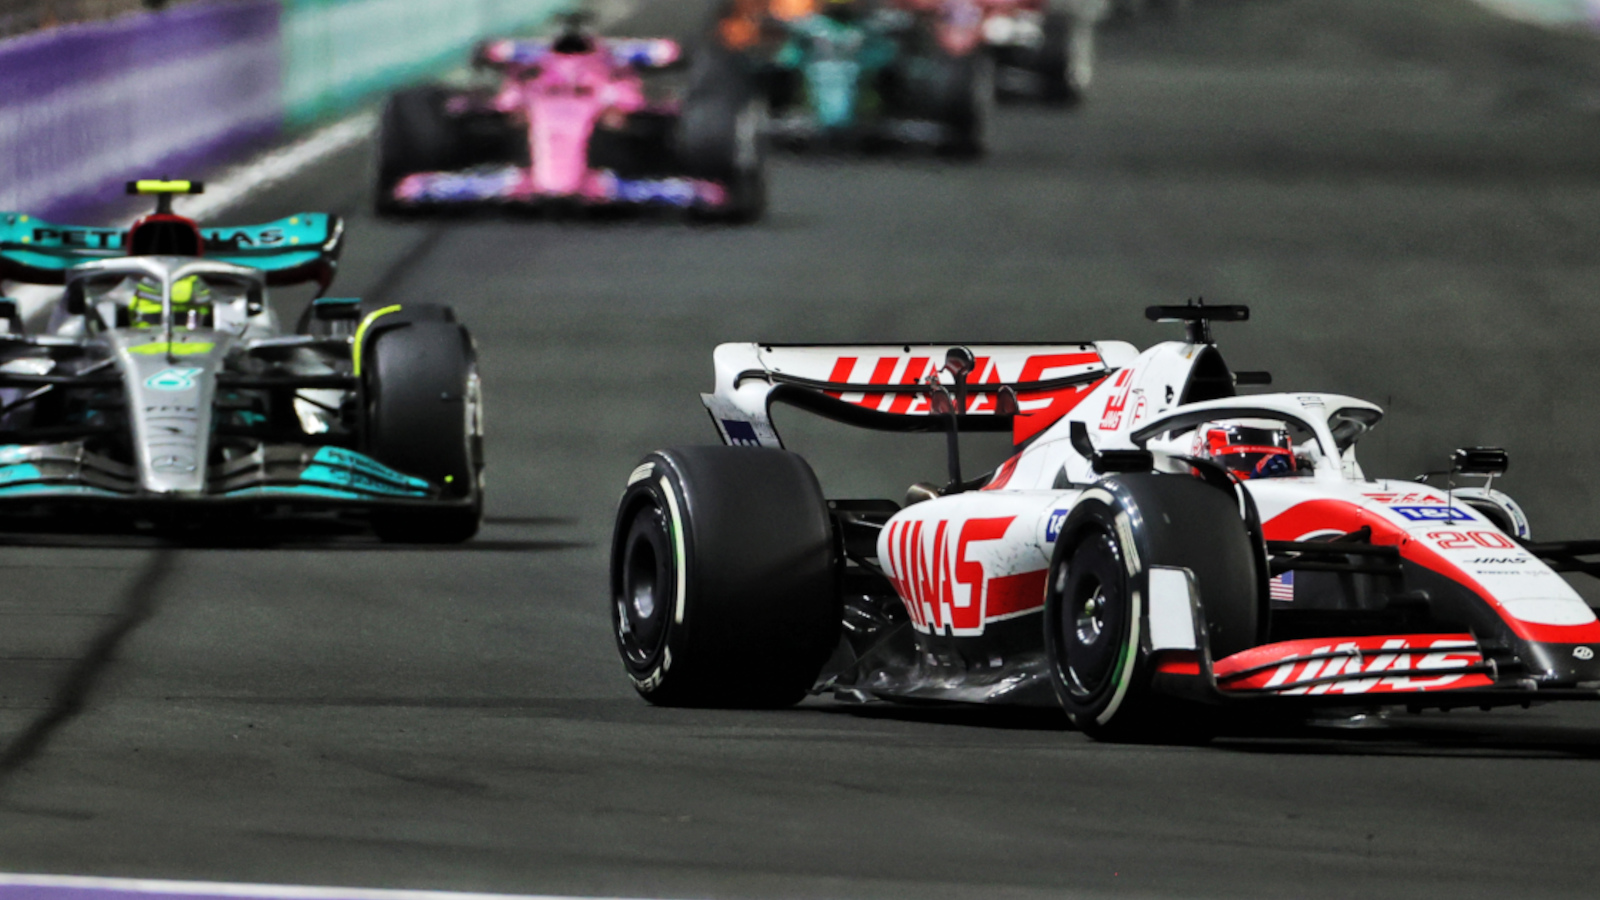 Kevin Magnussen leading Lewis Hamilton. Saudi Arabia March 2022